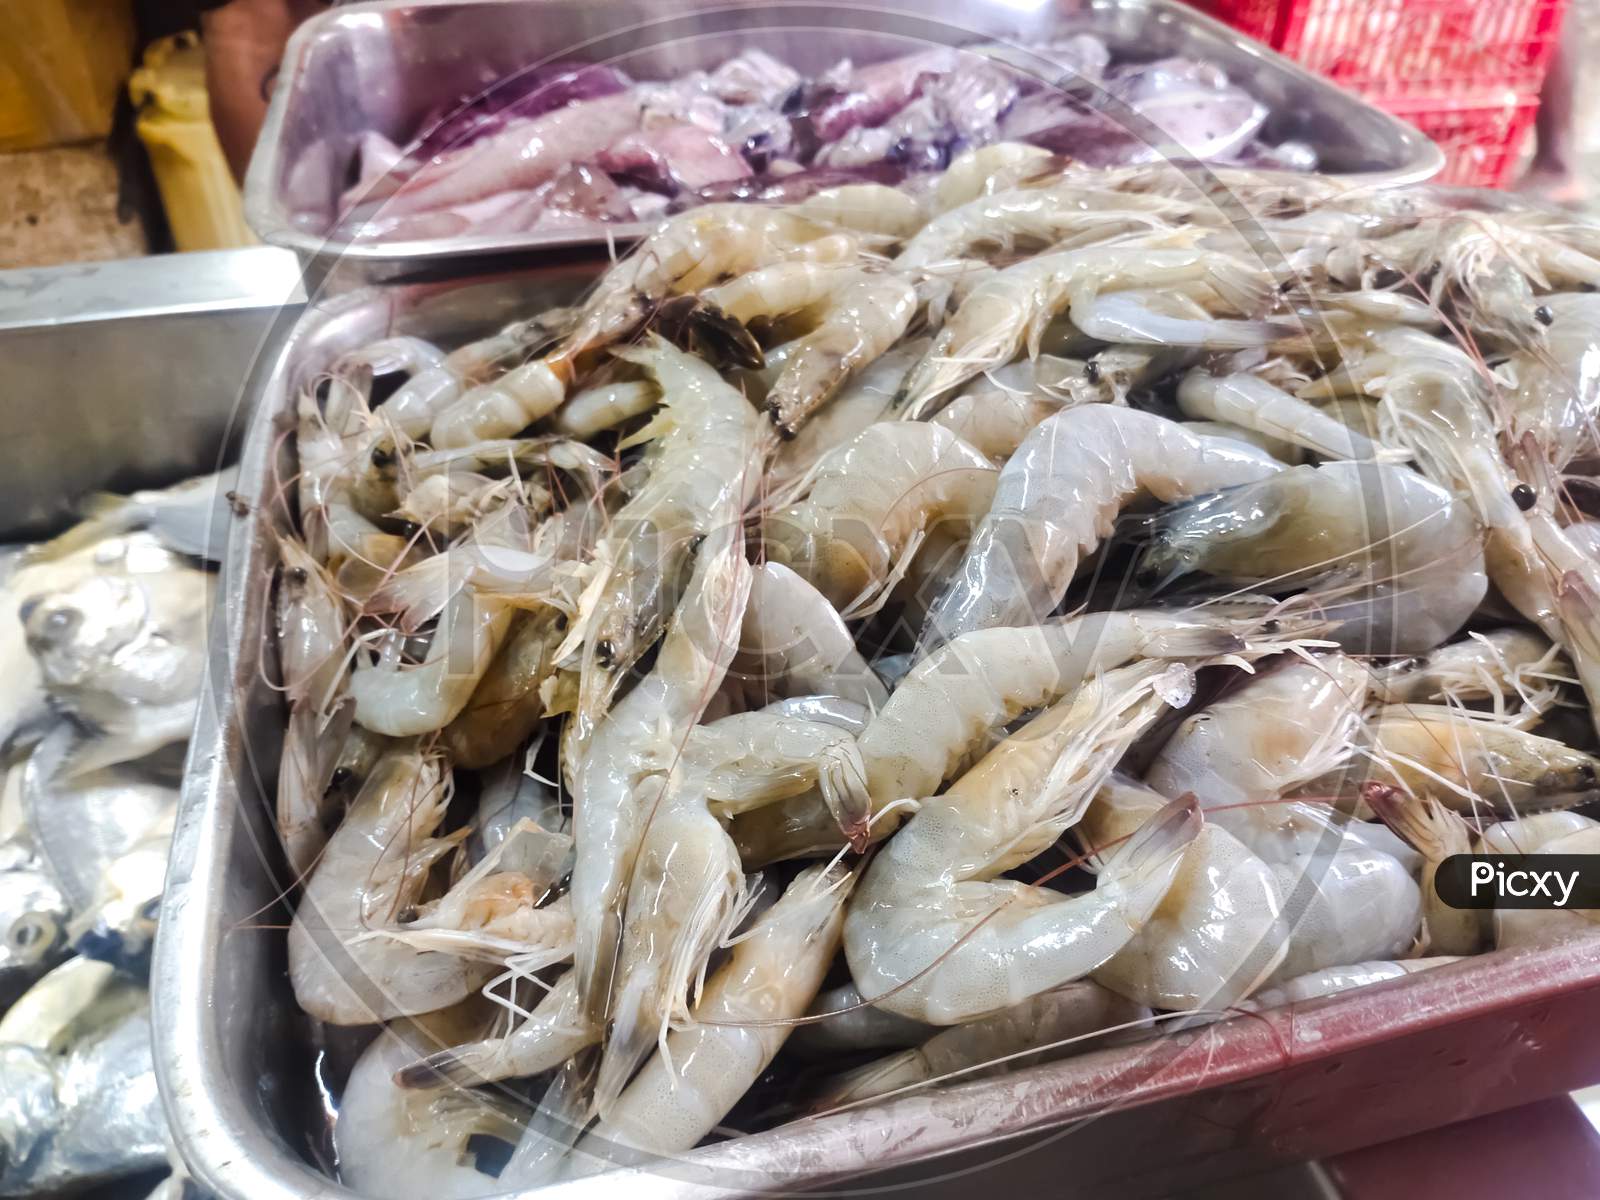 Seafood Market - Fresh Sea Fishes On Fish Market.